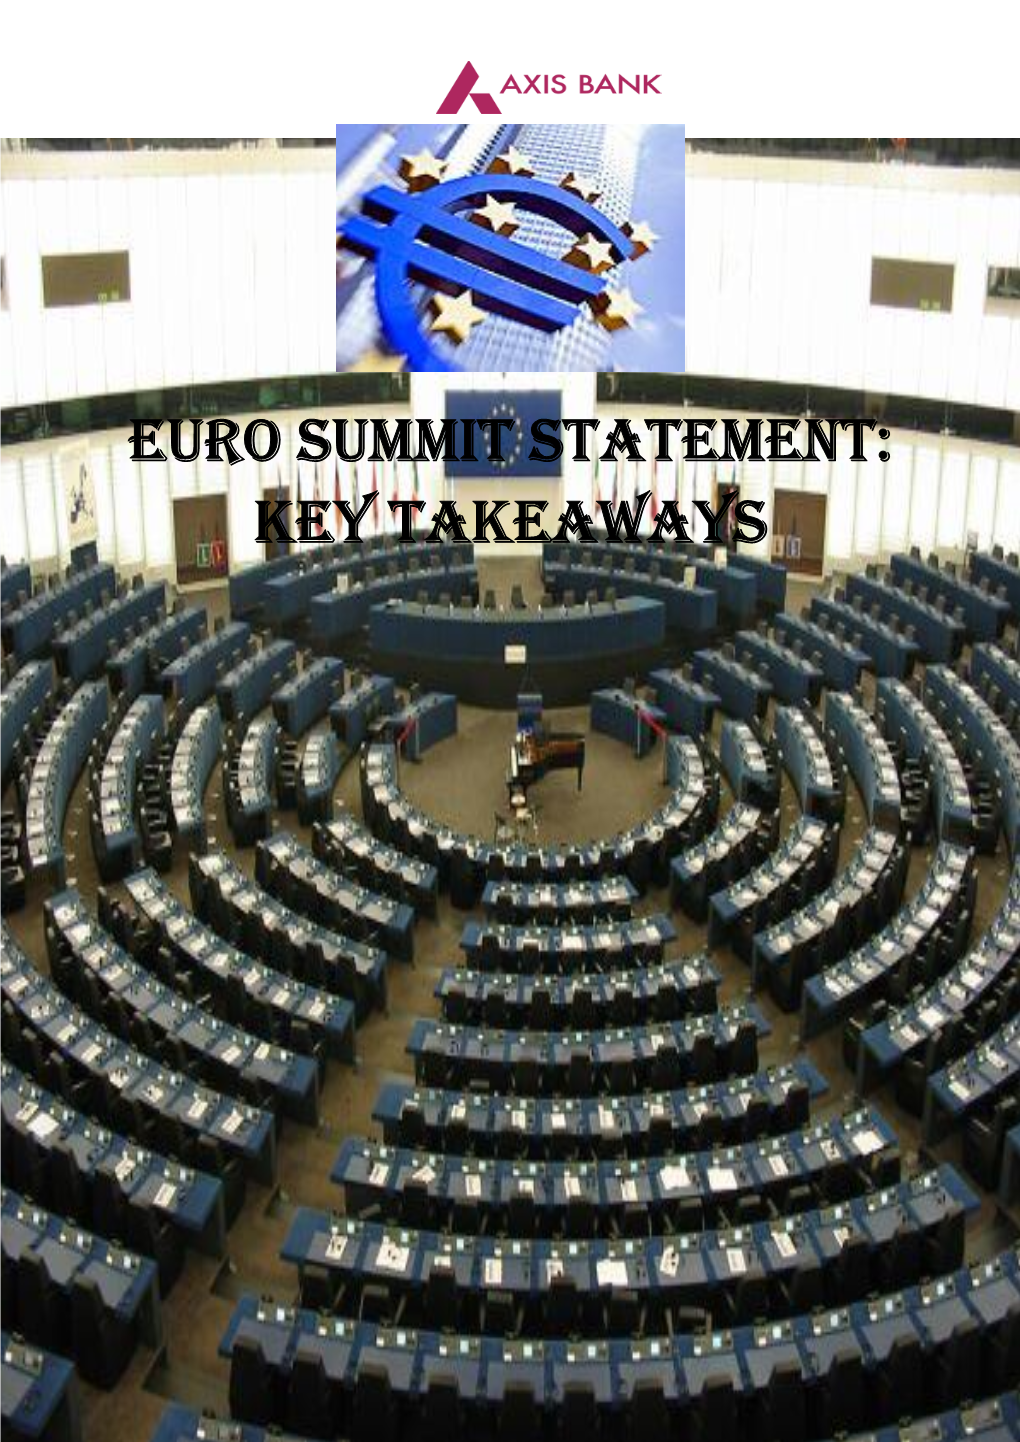 Euro Summit Statement: Key Takeaways